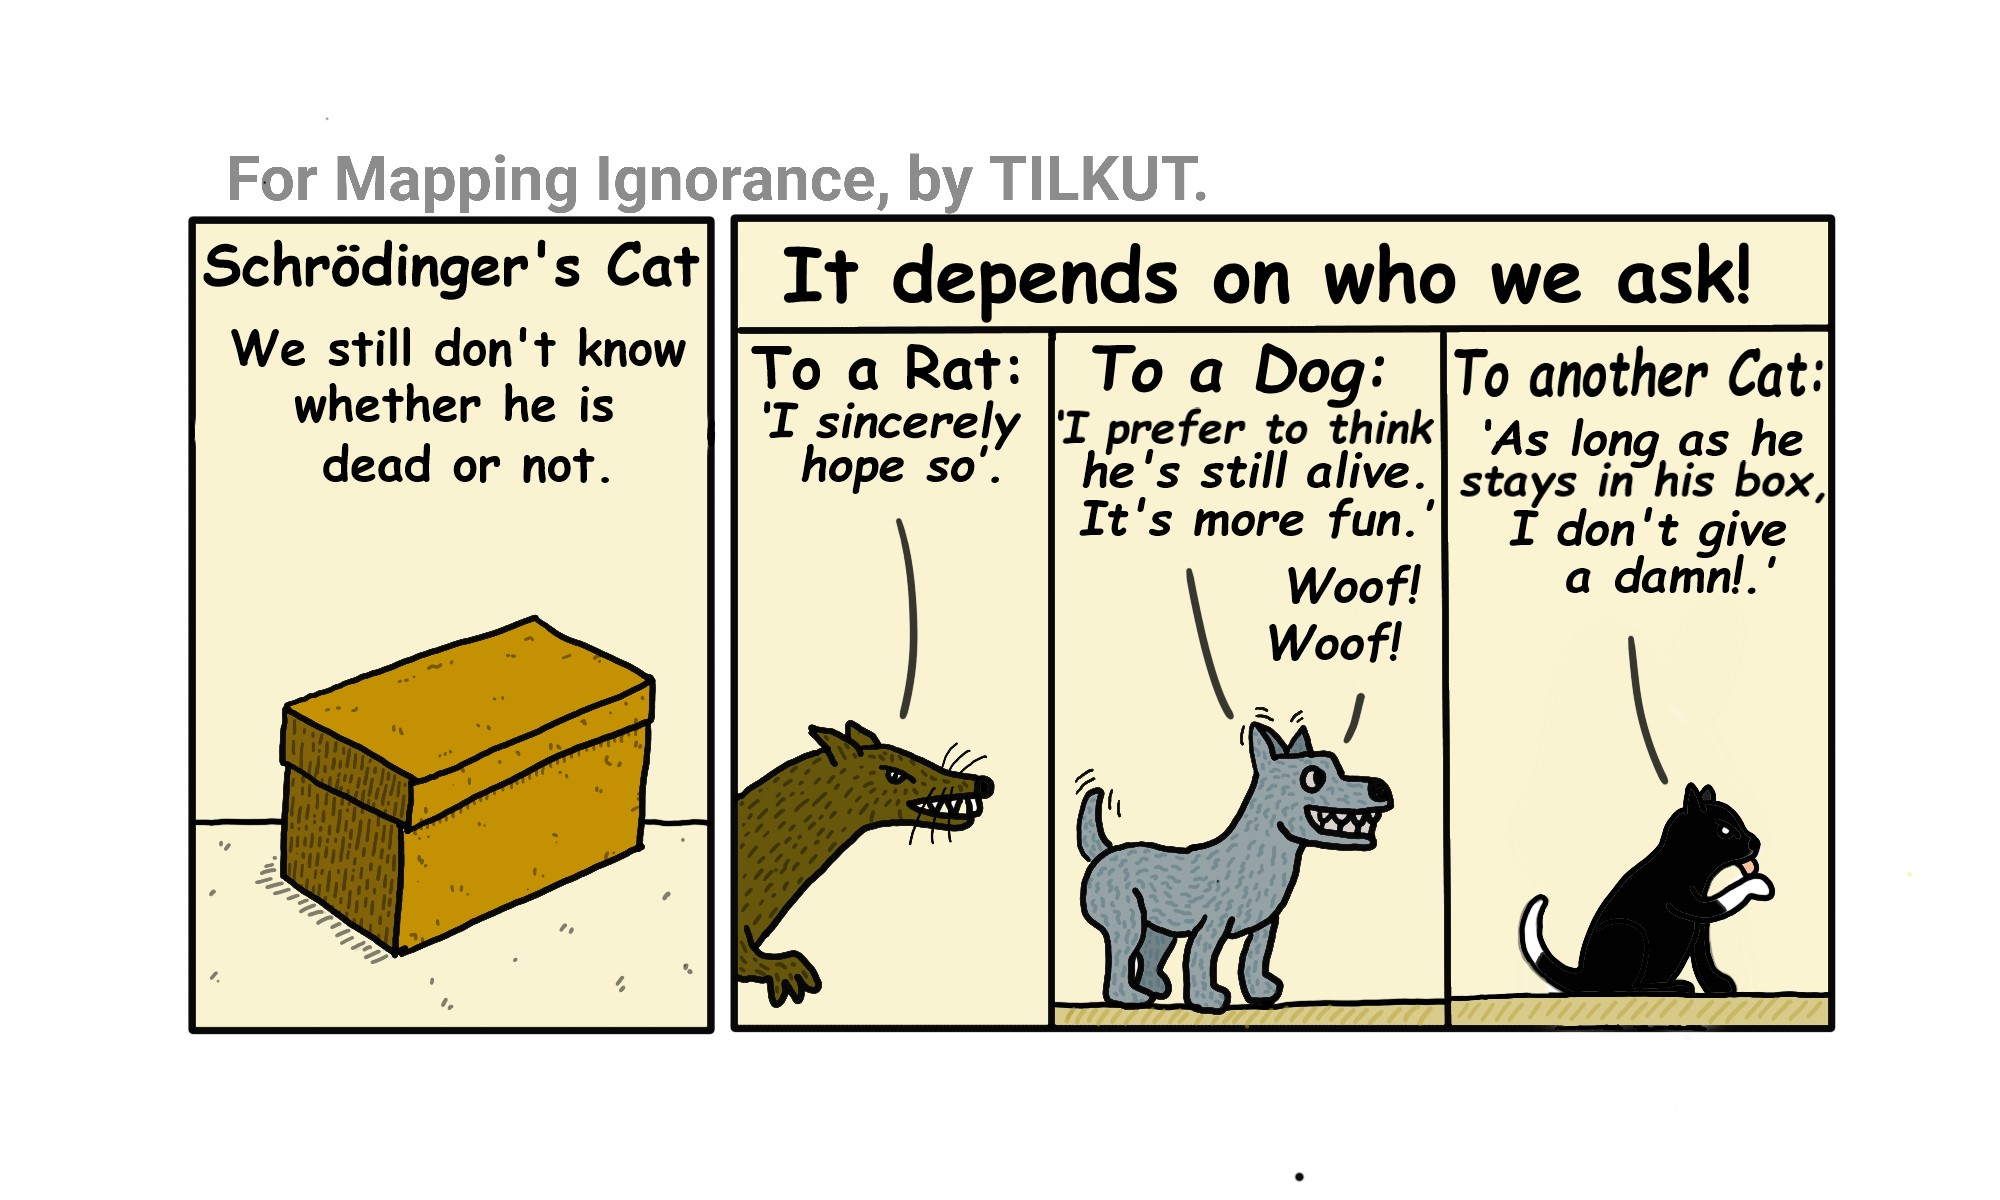 Schrödinger's cat